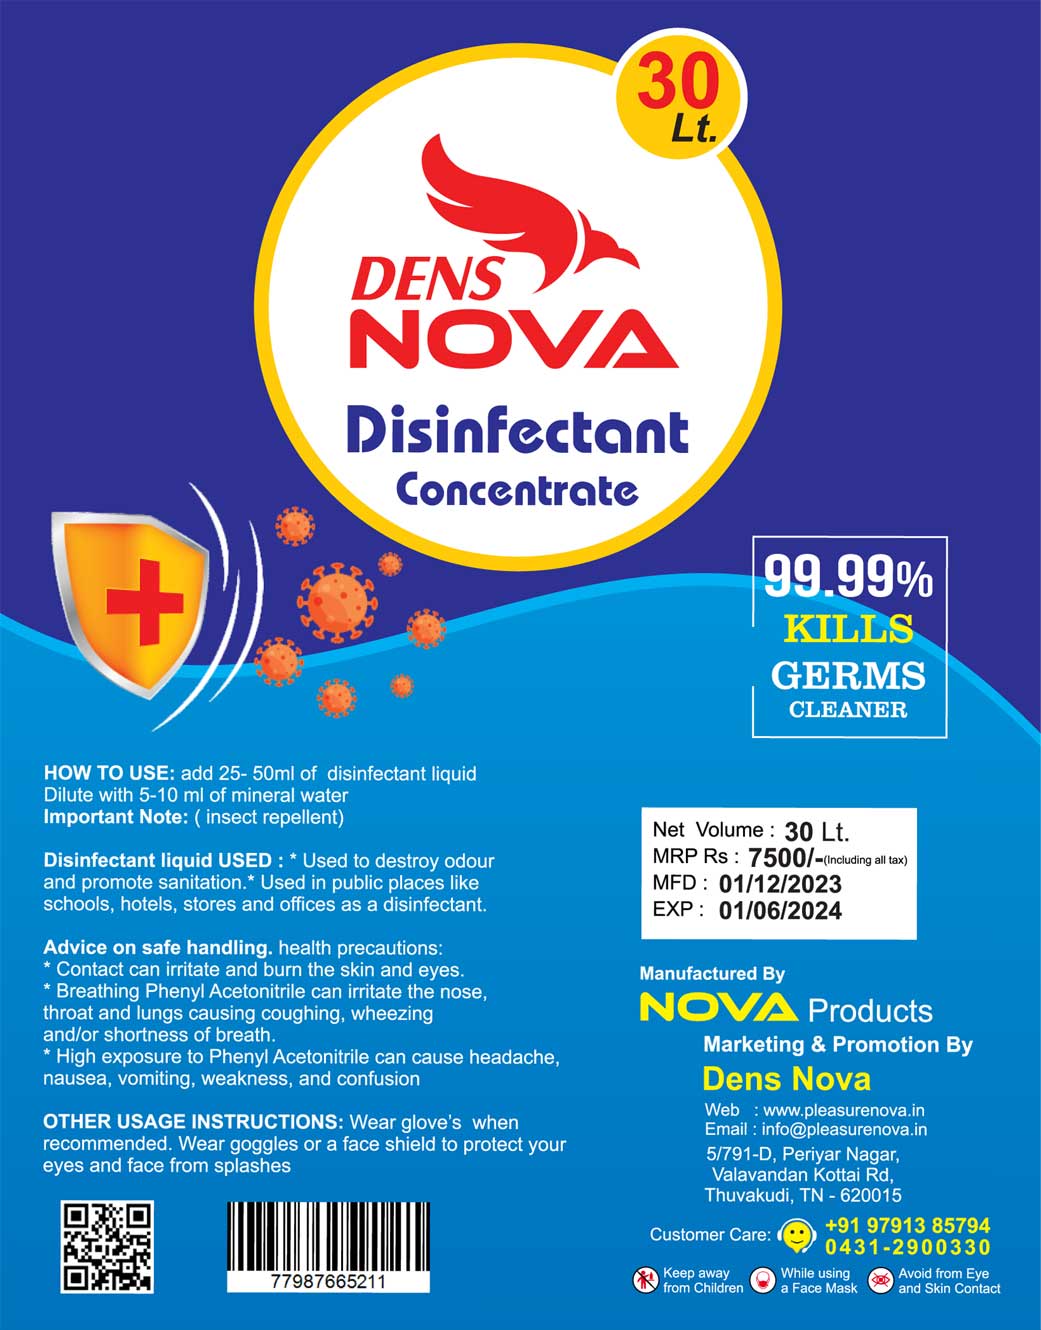 Dens Nova - Disinfectant Concentrate